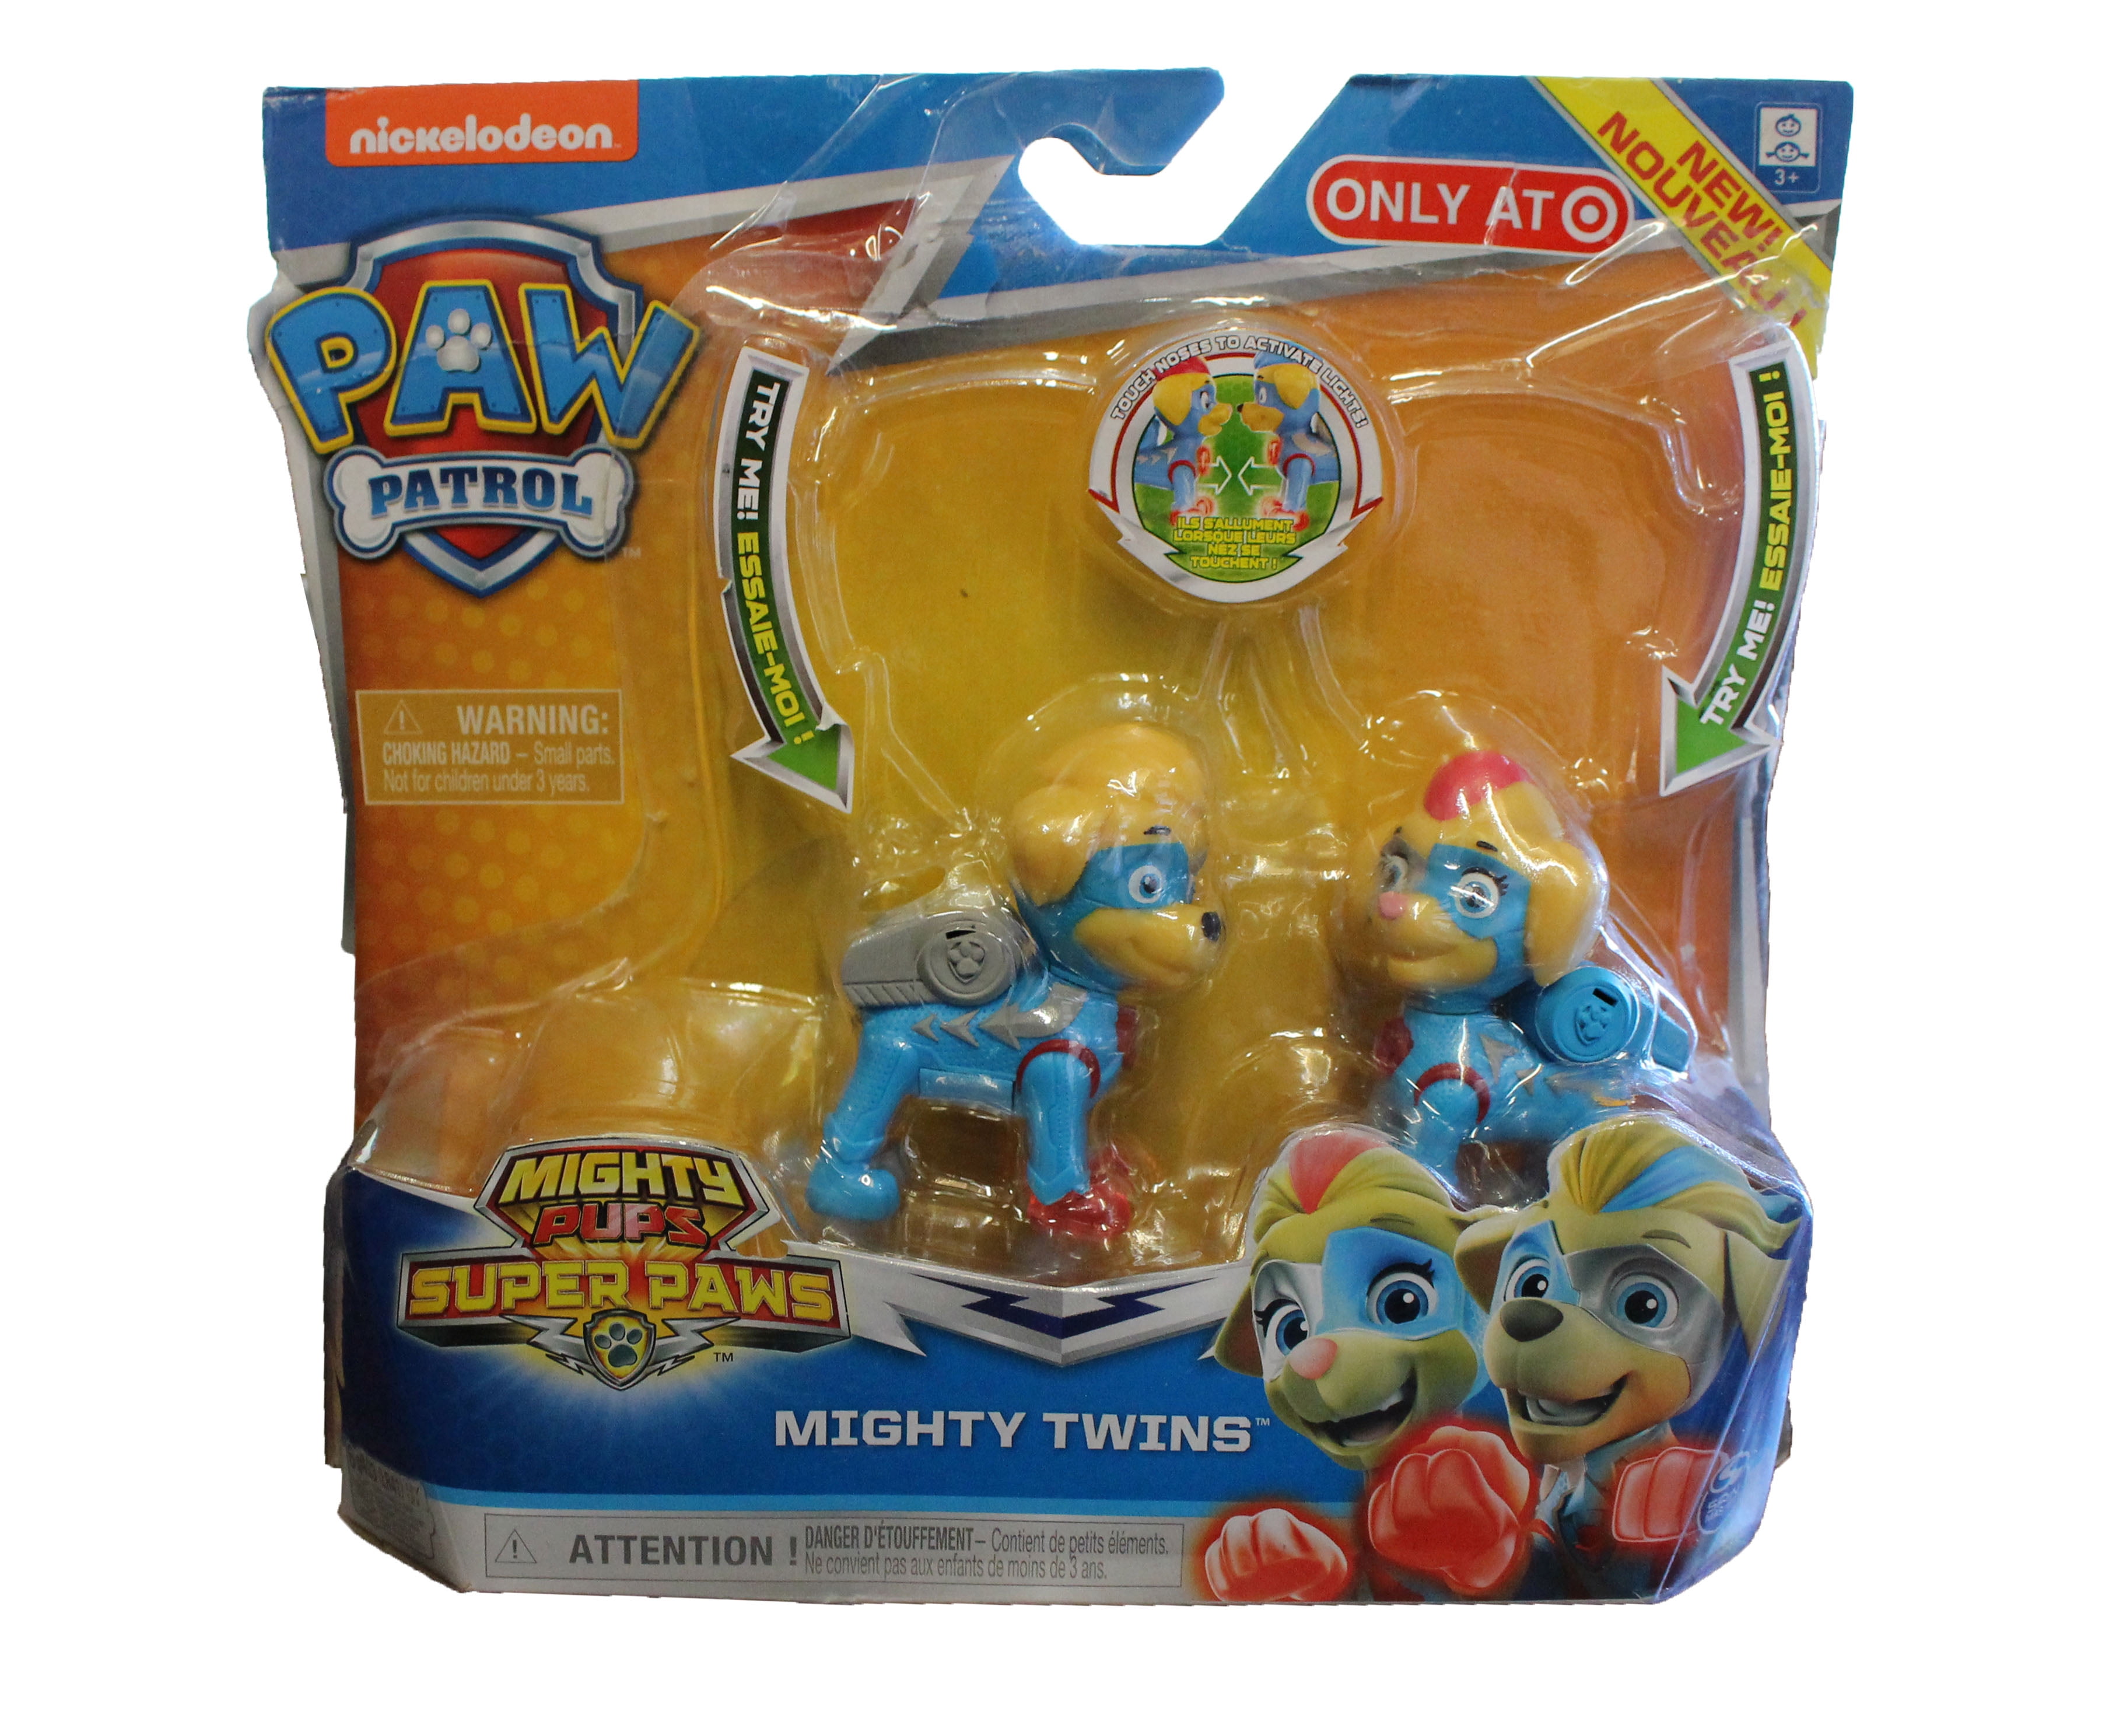 Nickelodeon Paw Patrol Mighty Twins - Walmart.com